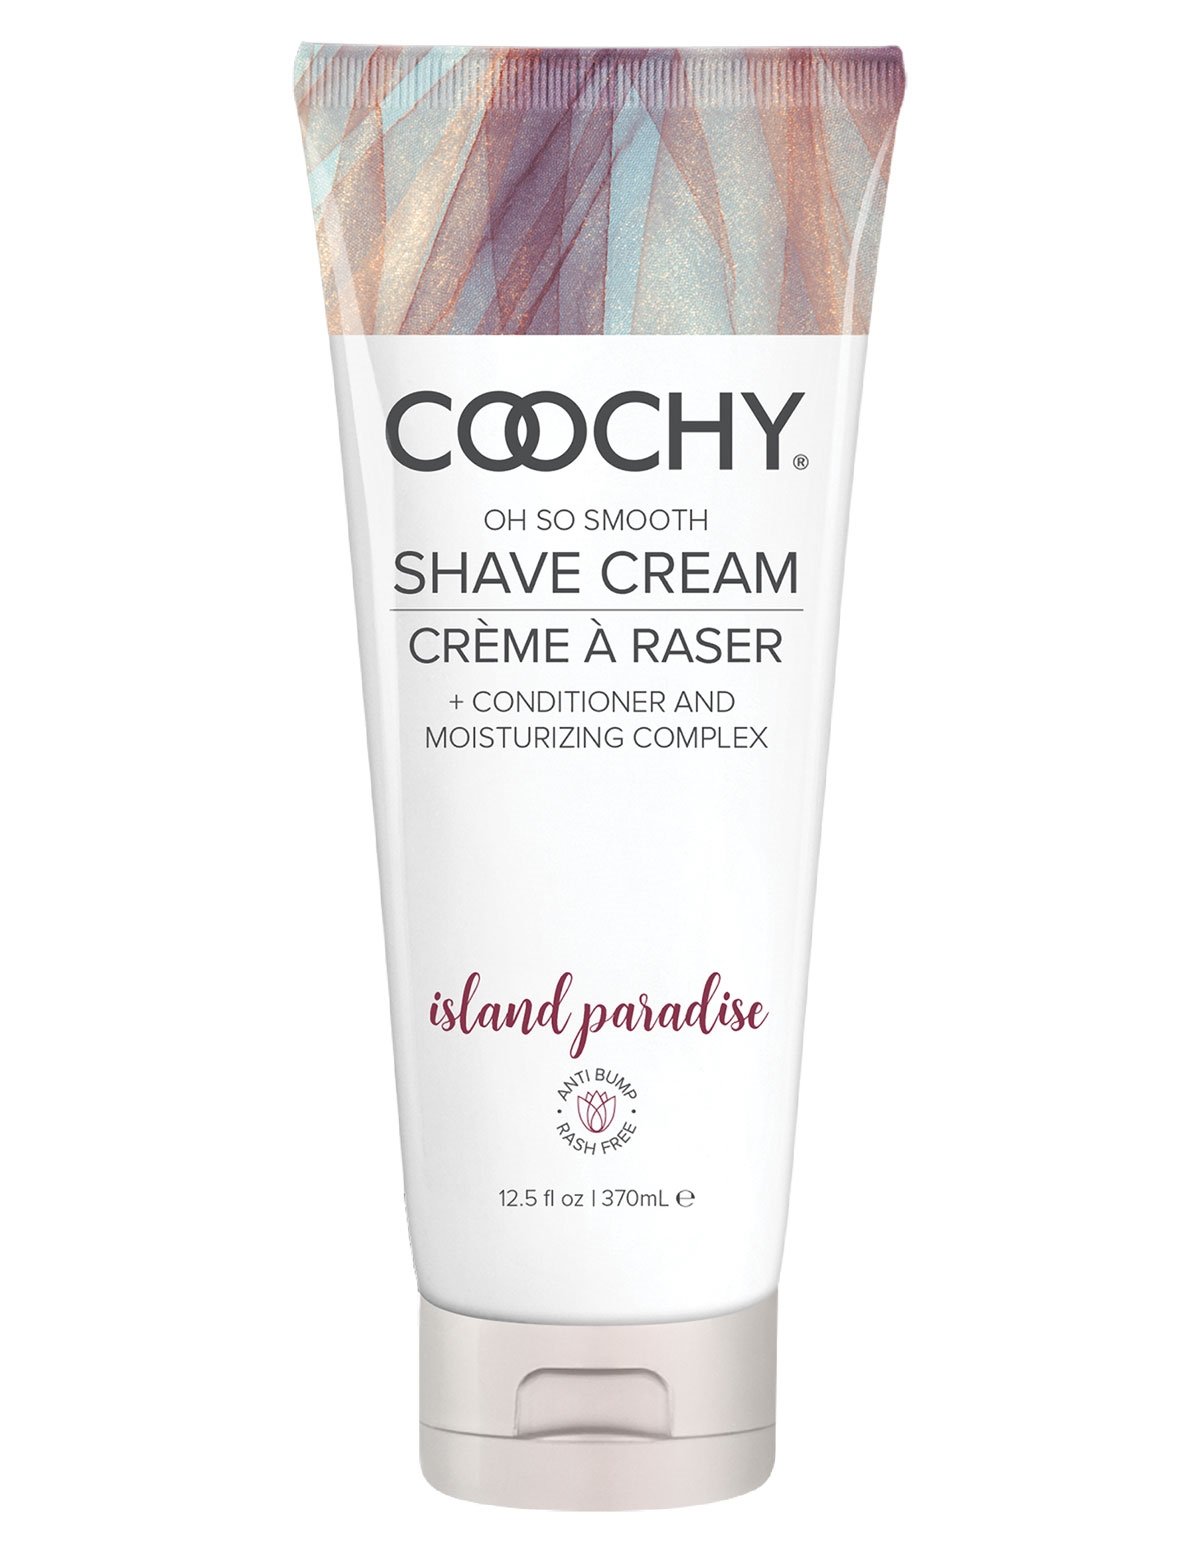 alternate image for Coochy Shave Cream - Island Paradise